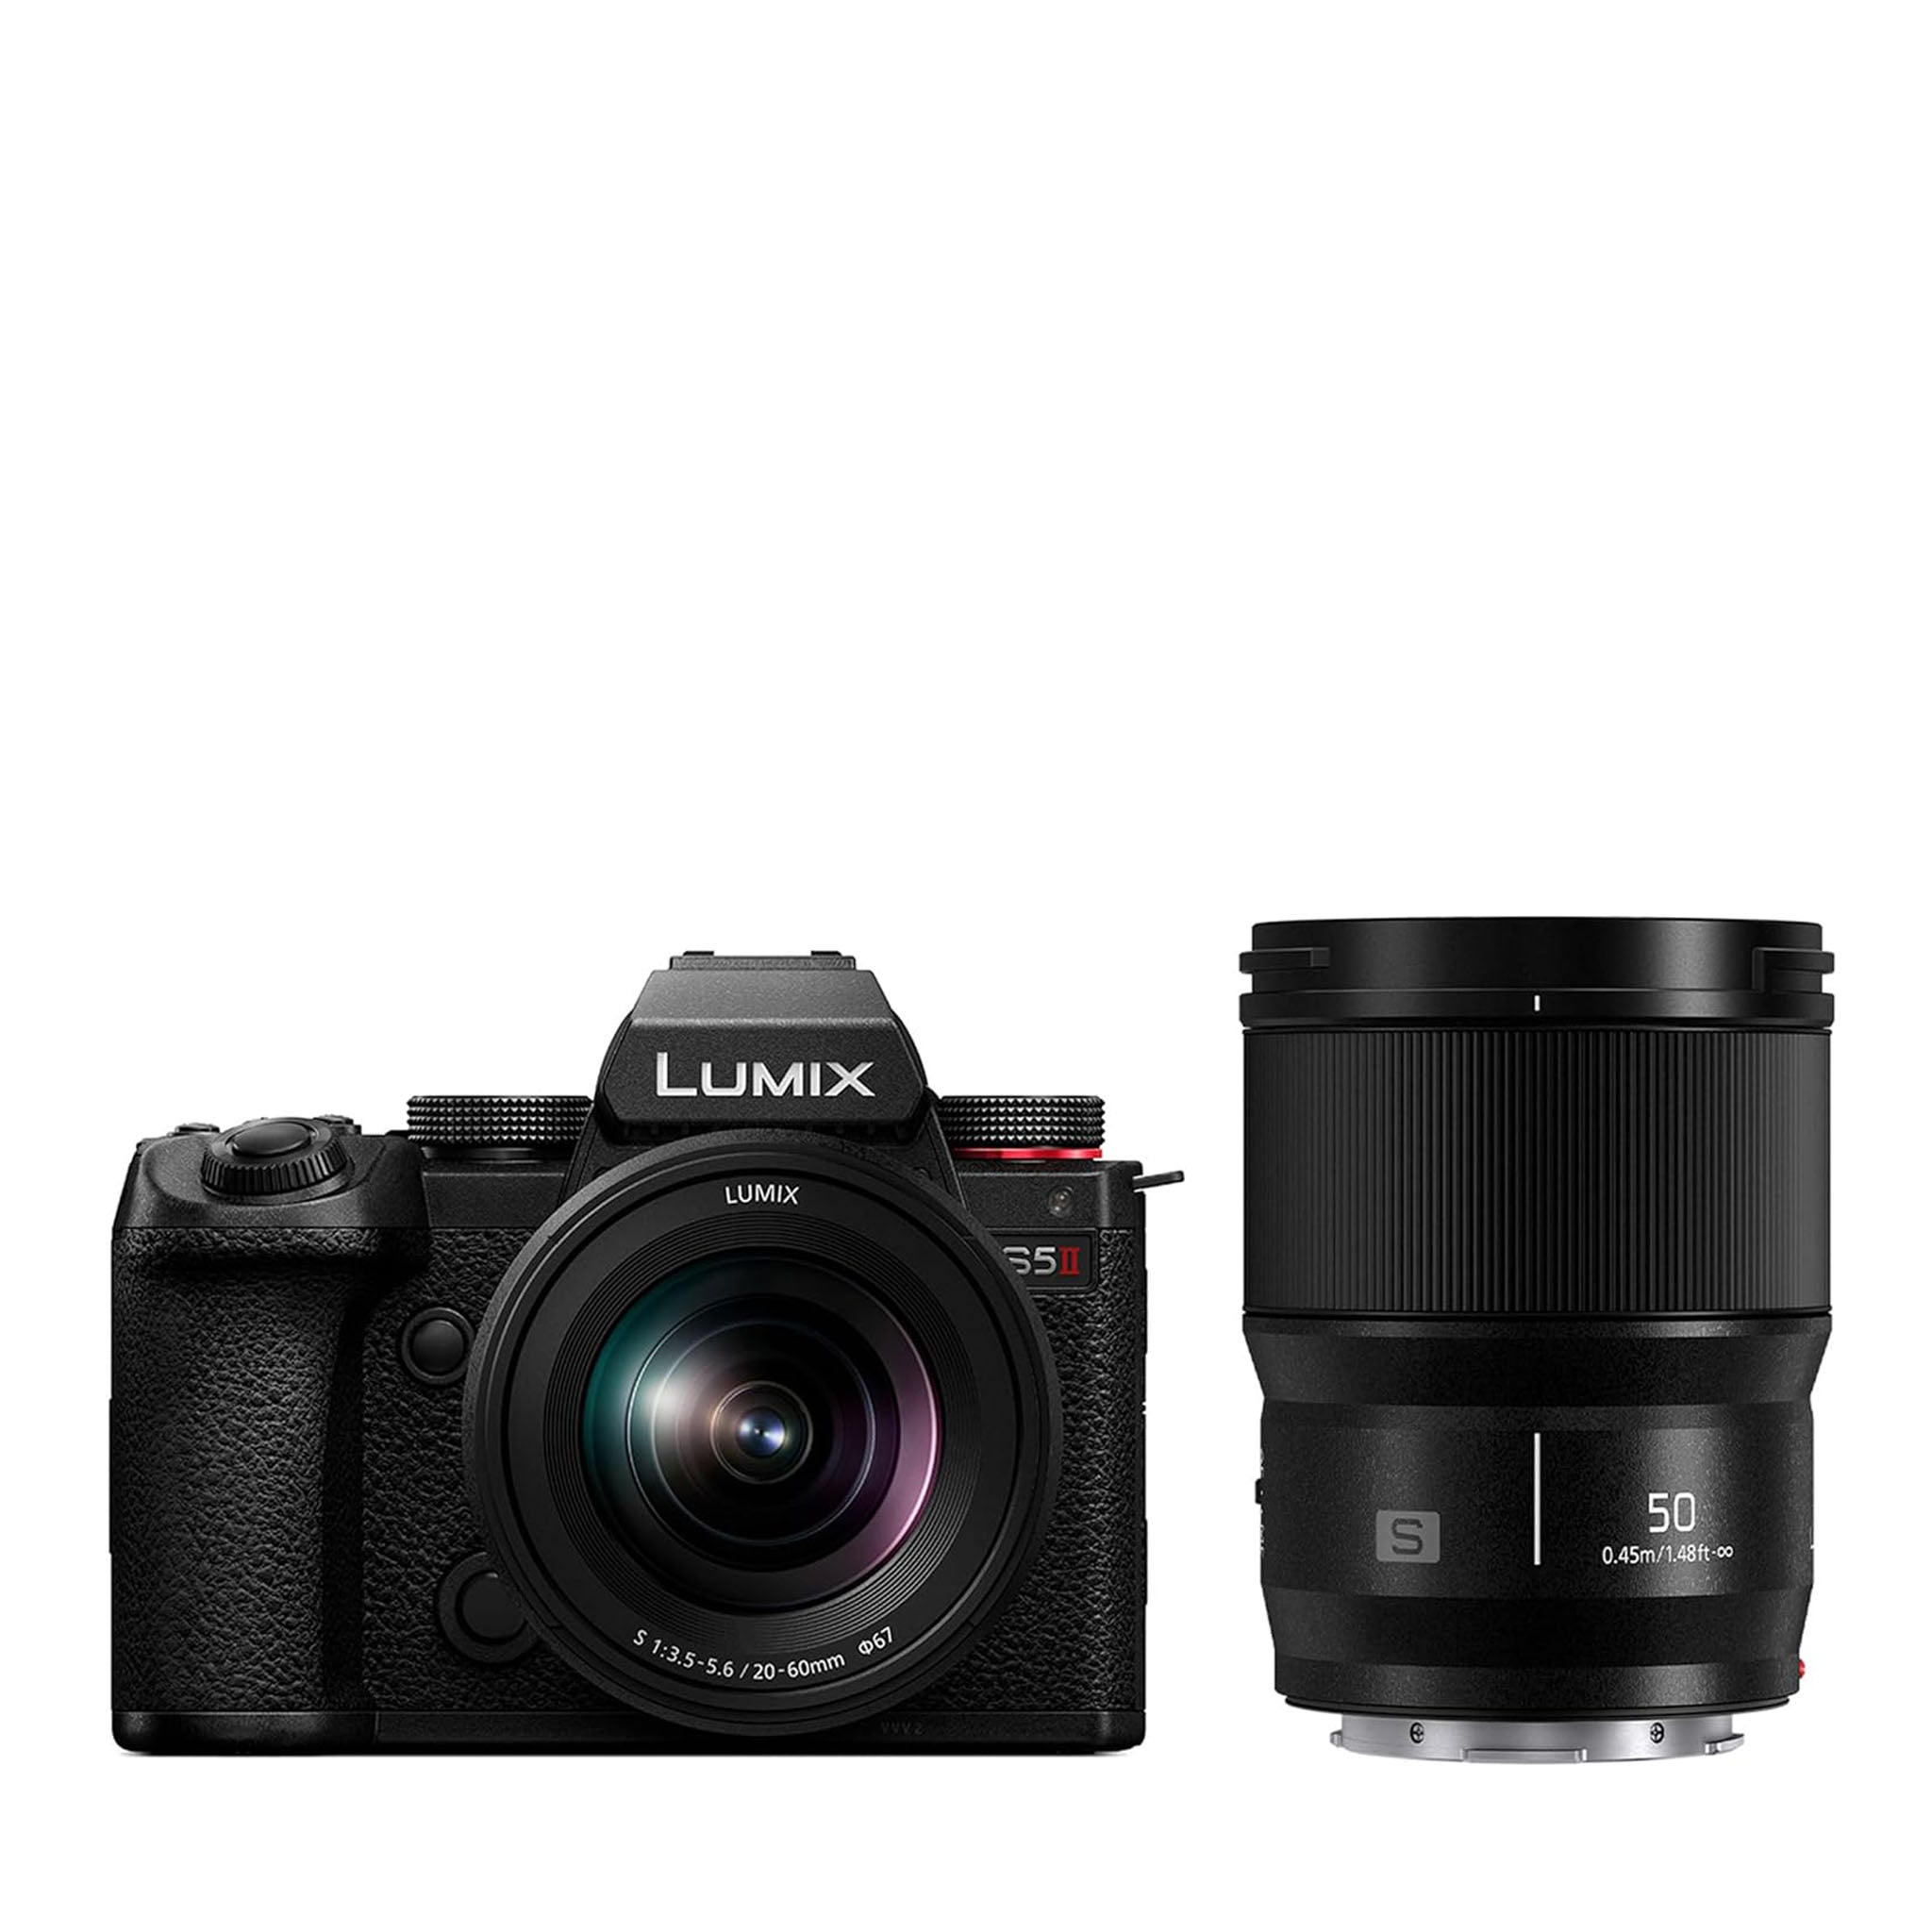 Panasonic Introduces New Lumix S5 Mark II and Mark II X Cameras